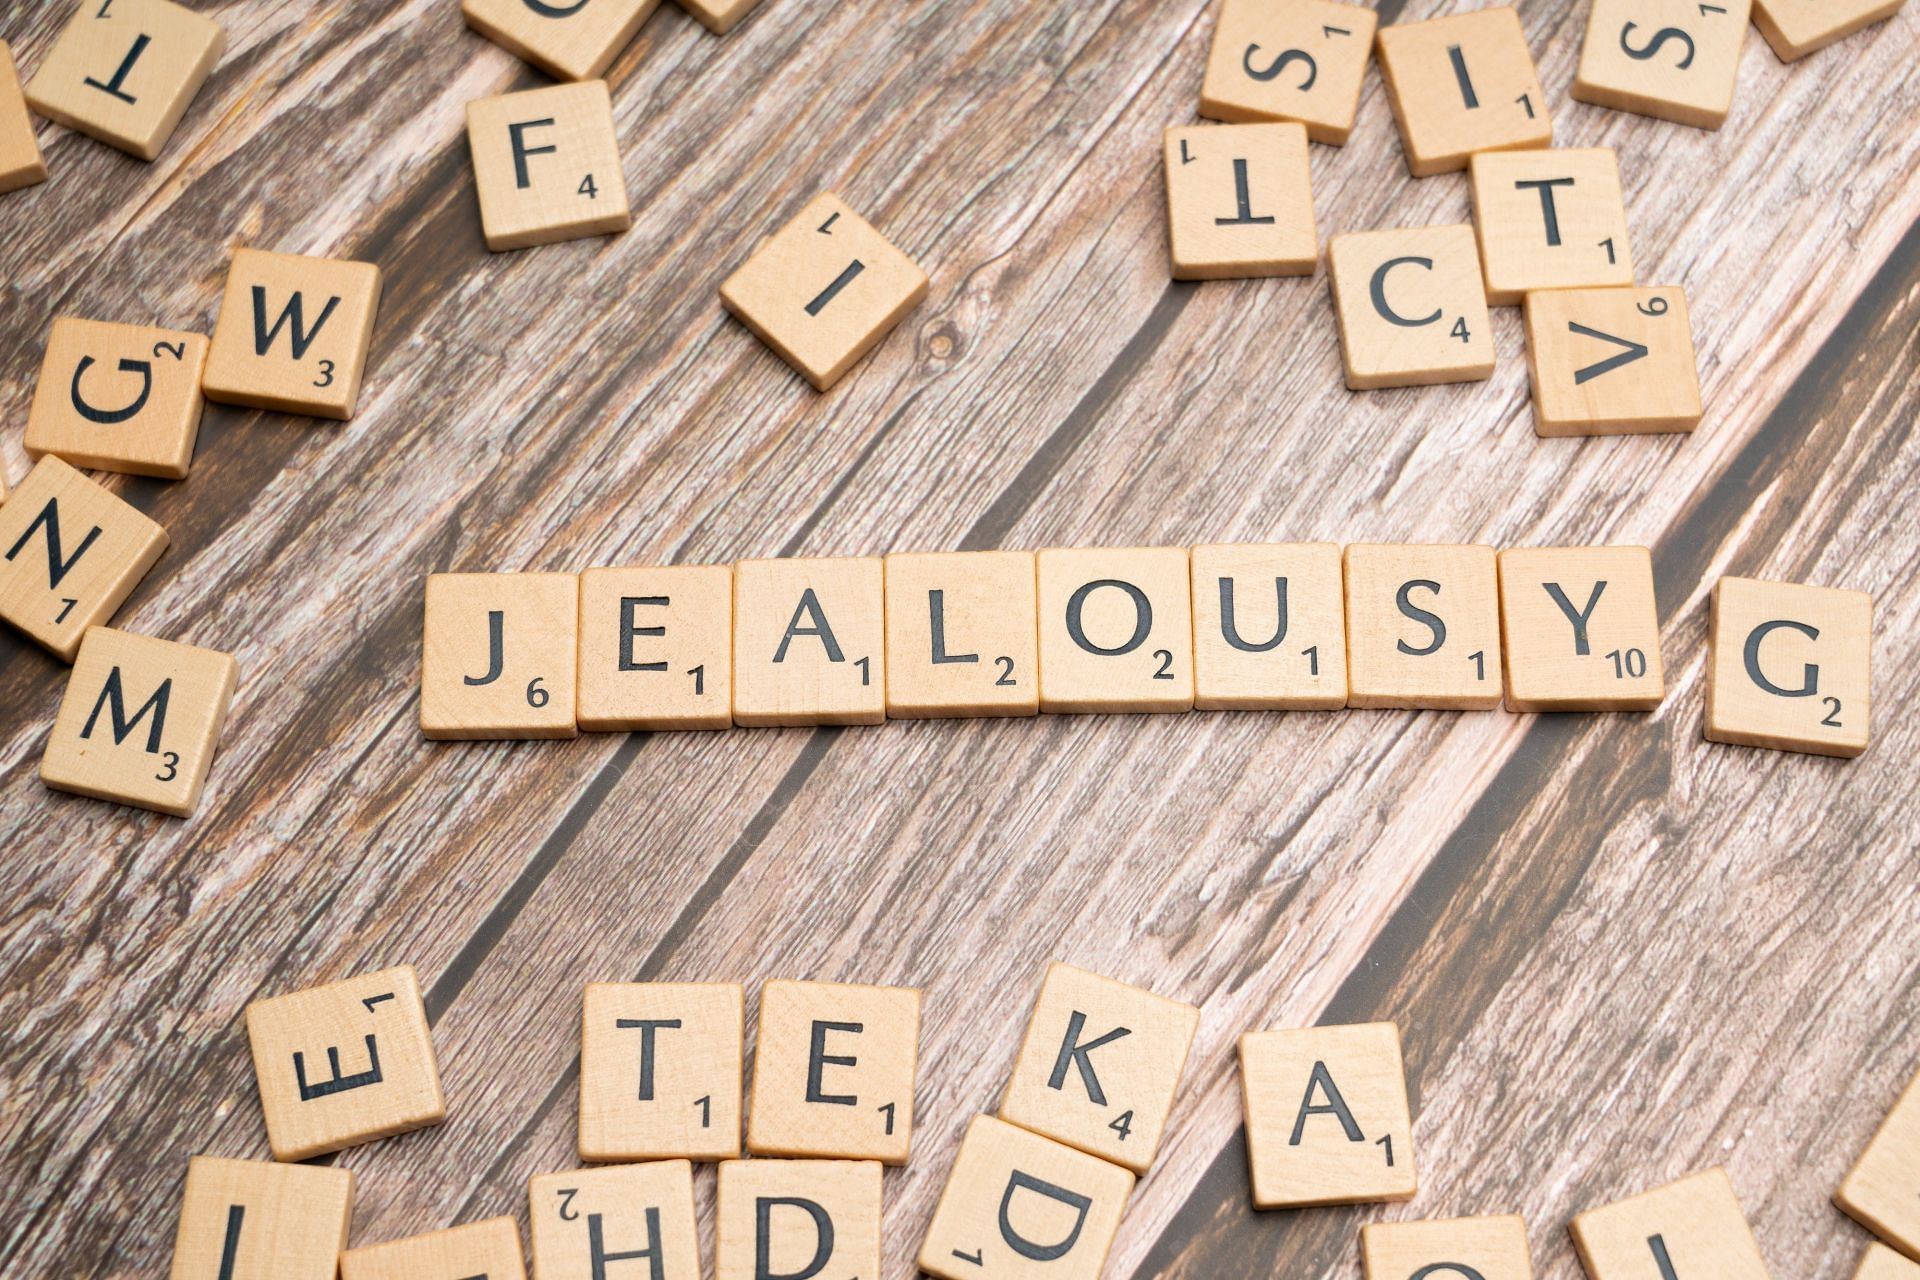 Jealousy can eat up relationship energy. (Image via Pexels/Markus Winkler)